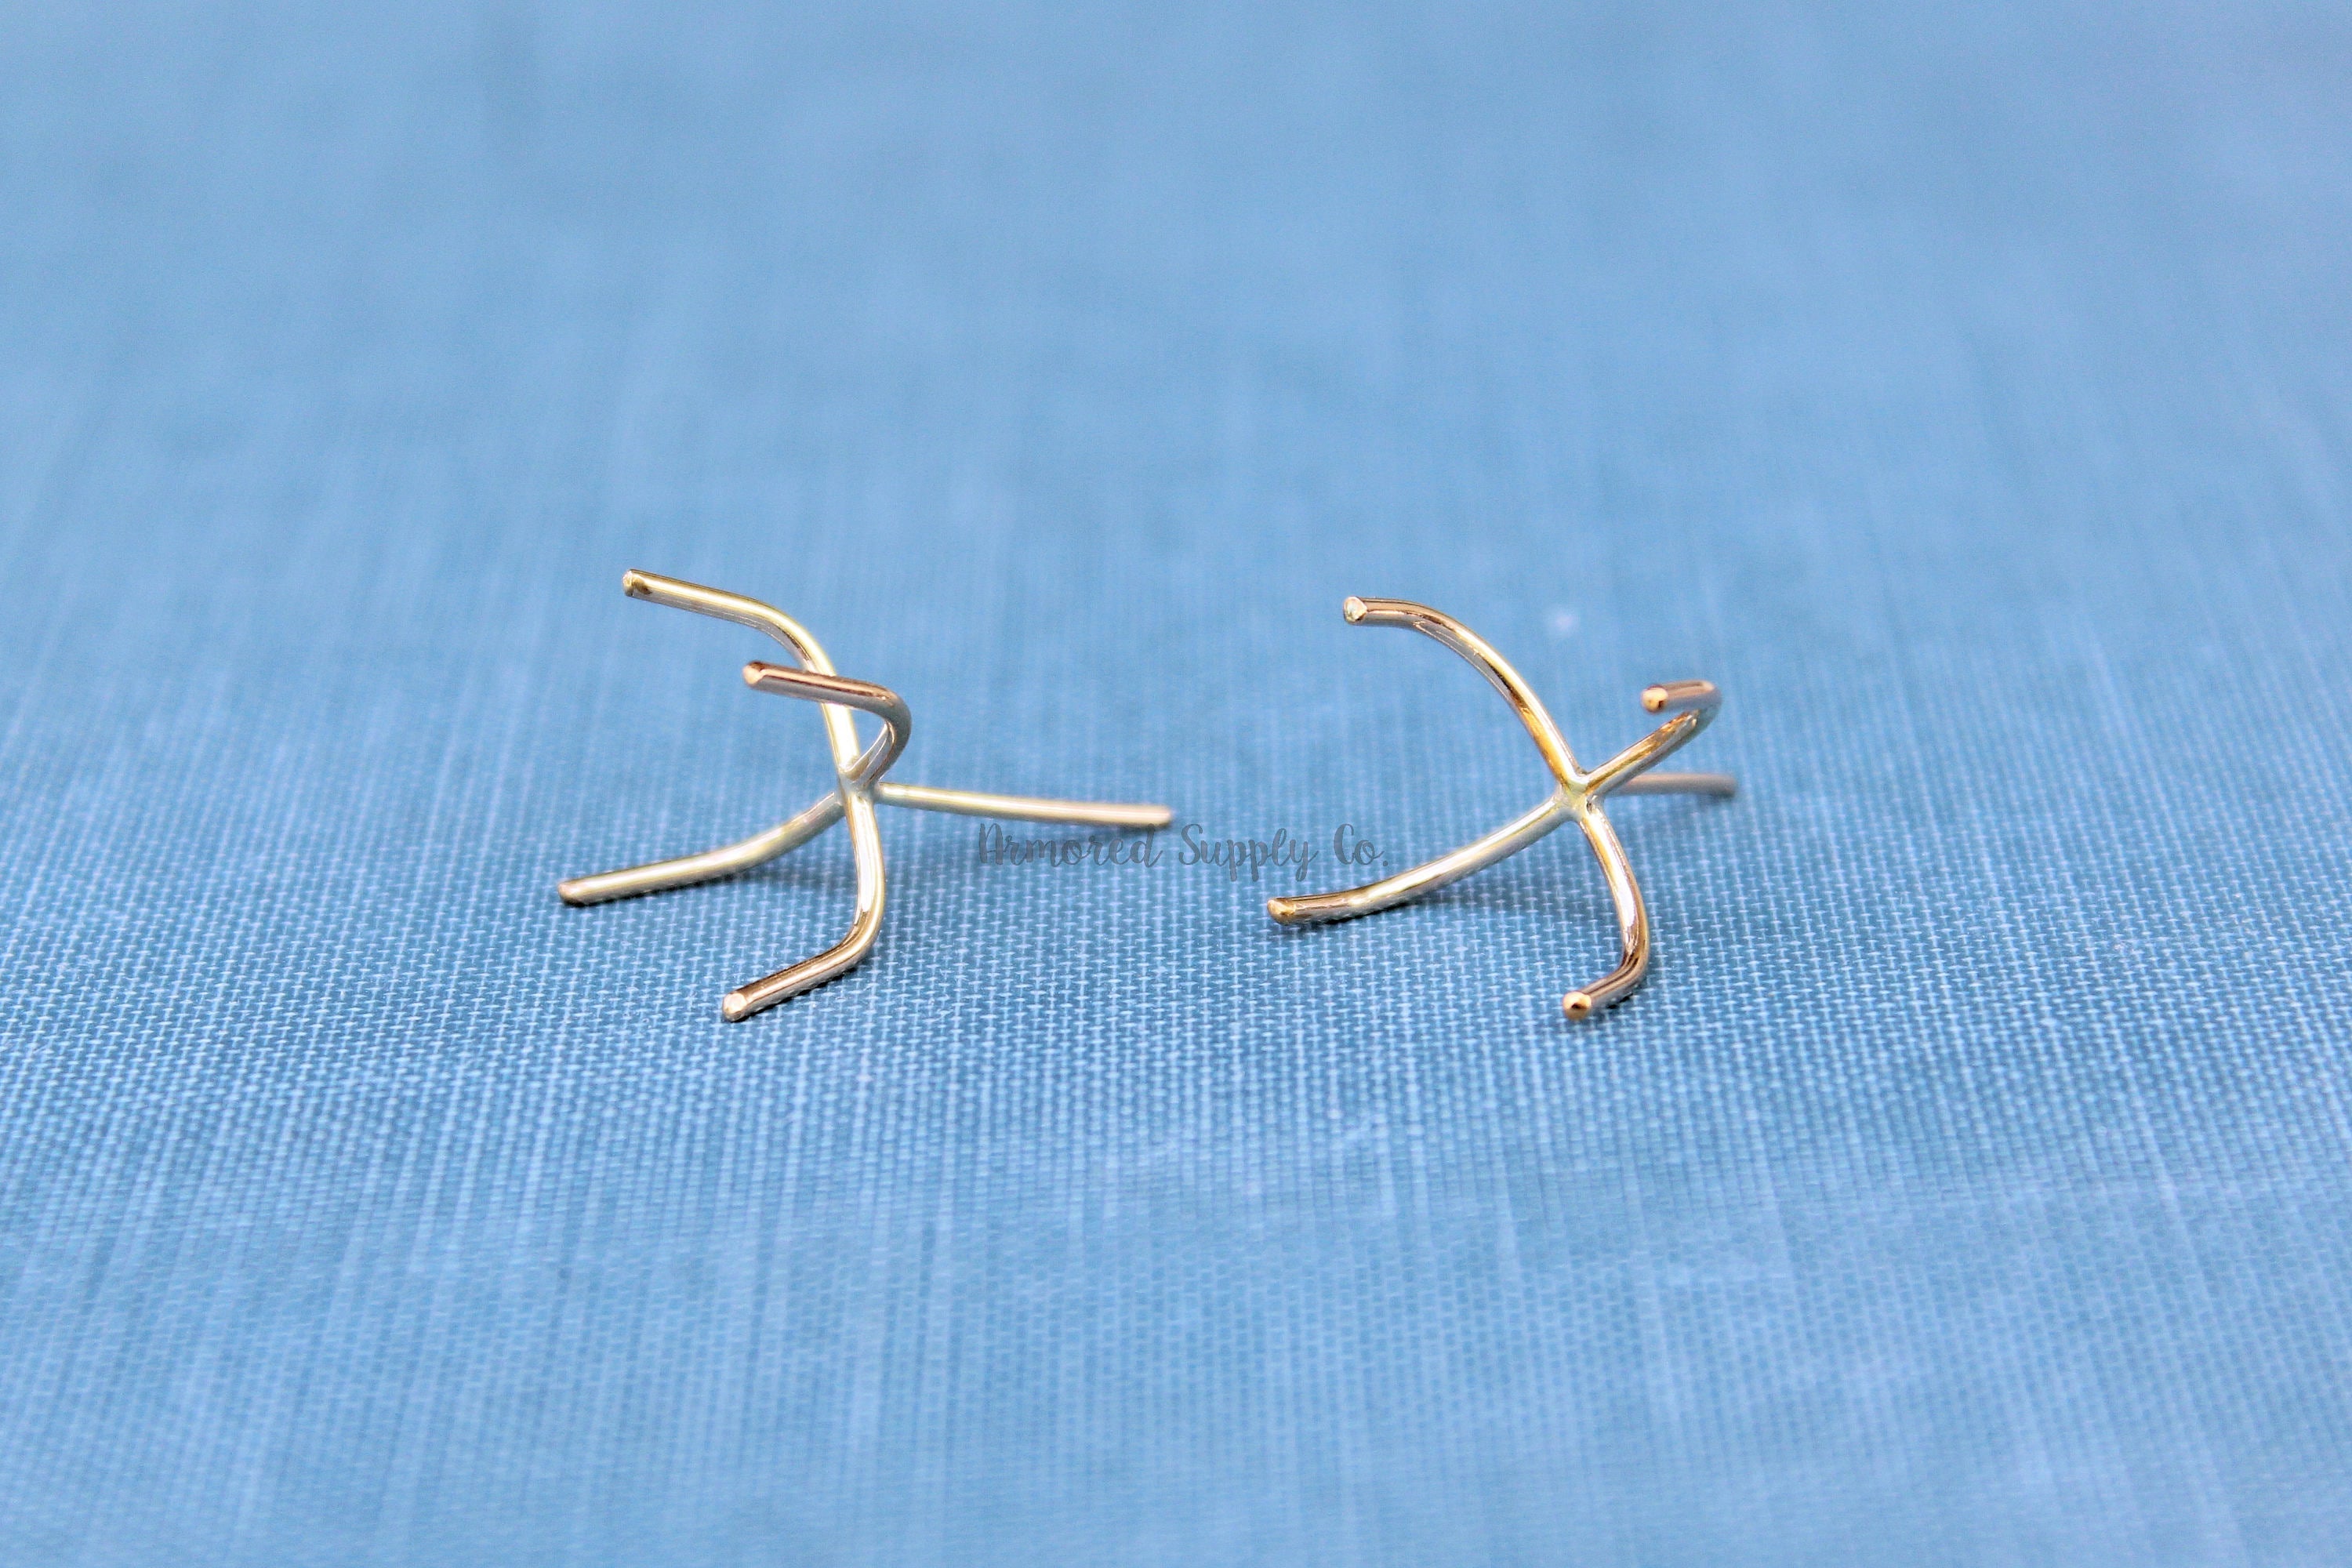 3 Pairs Sterling Silver Stud Post Claw Earring Blanks Handmade Earring Wire  DIY Earring Supplies Great for Gemstone Stud Earrings Making